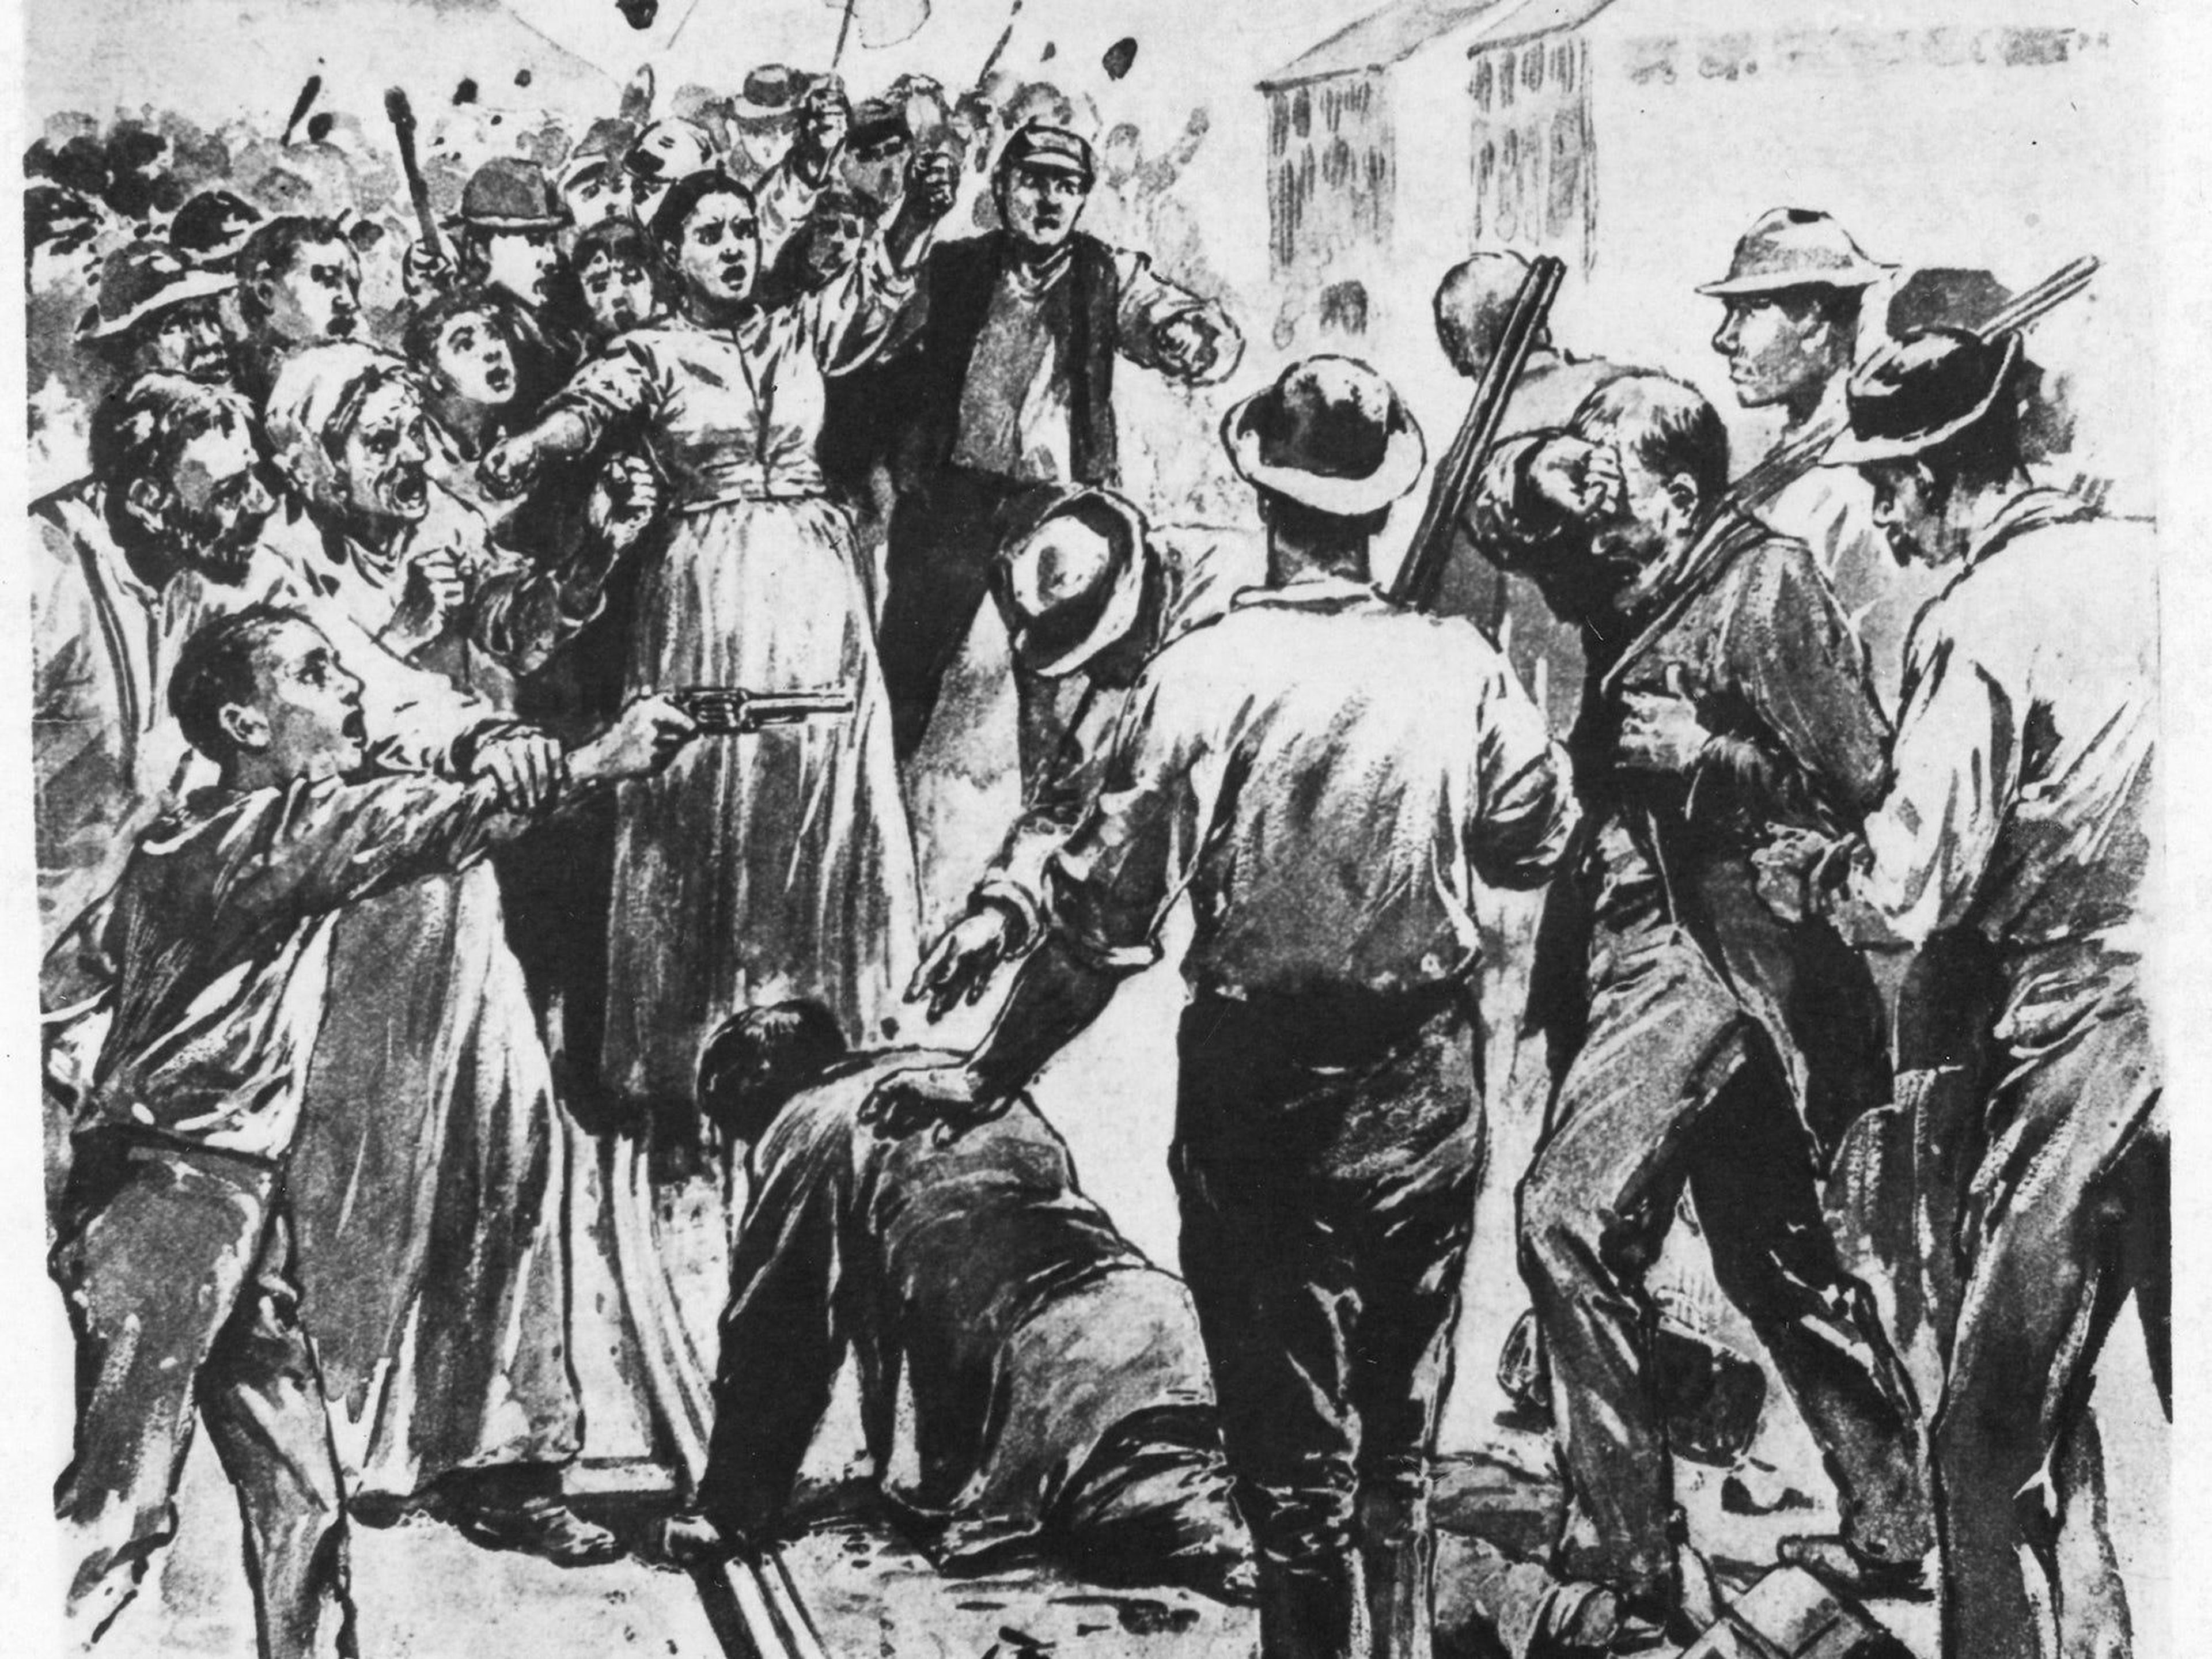 The Homestead Mill Strike of 1892 in Homestead, Pennsylvania. 